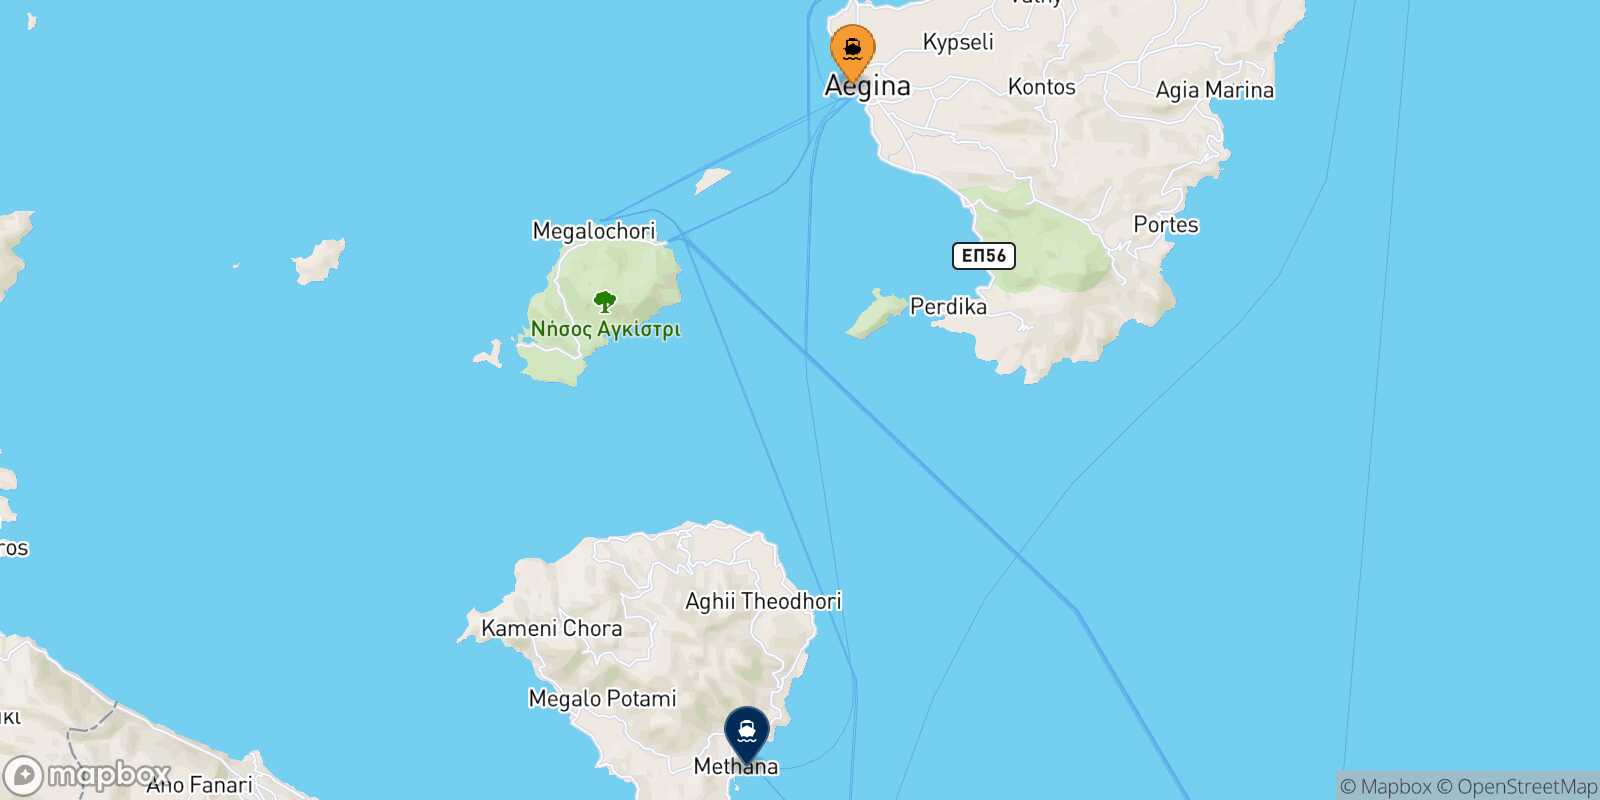 Mappa della rotta Aegina Methana